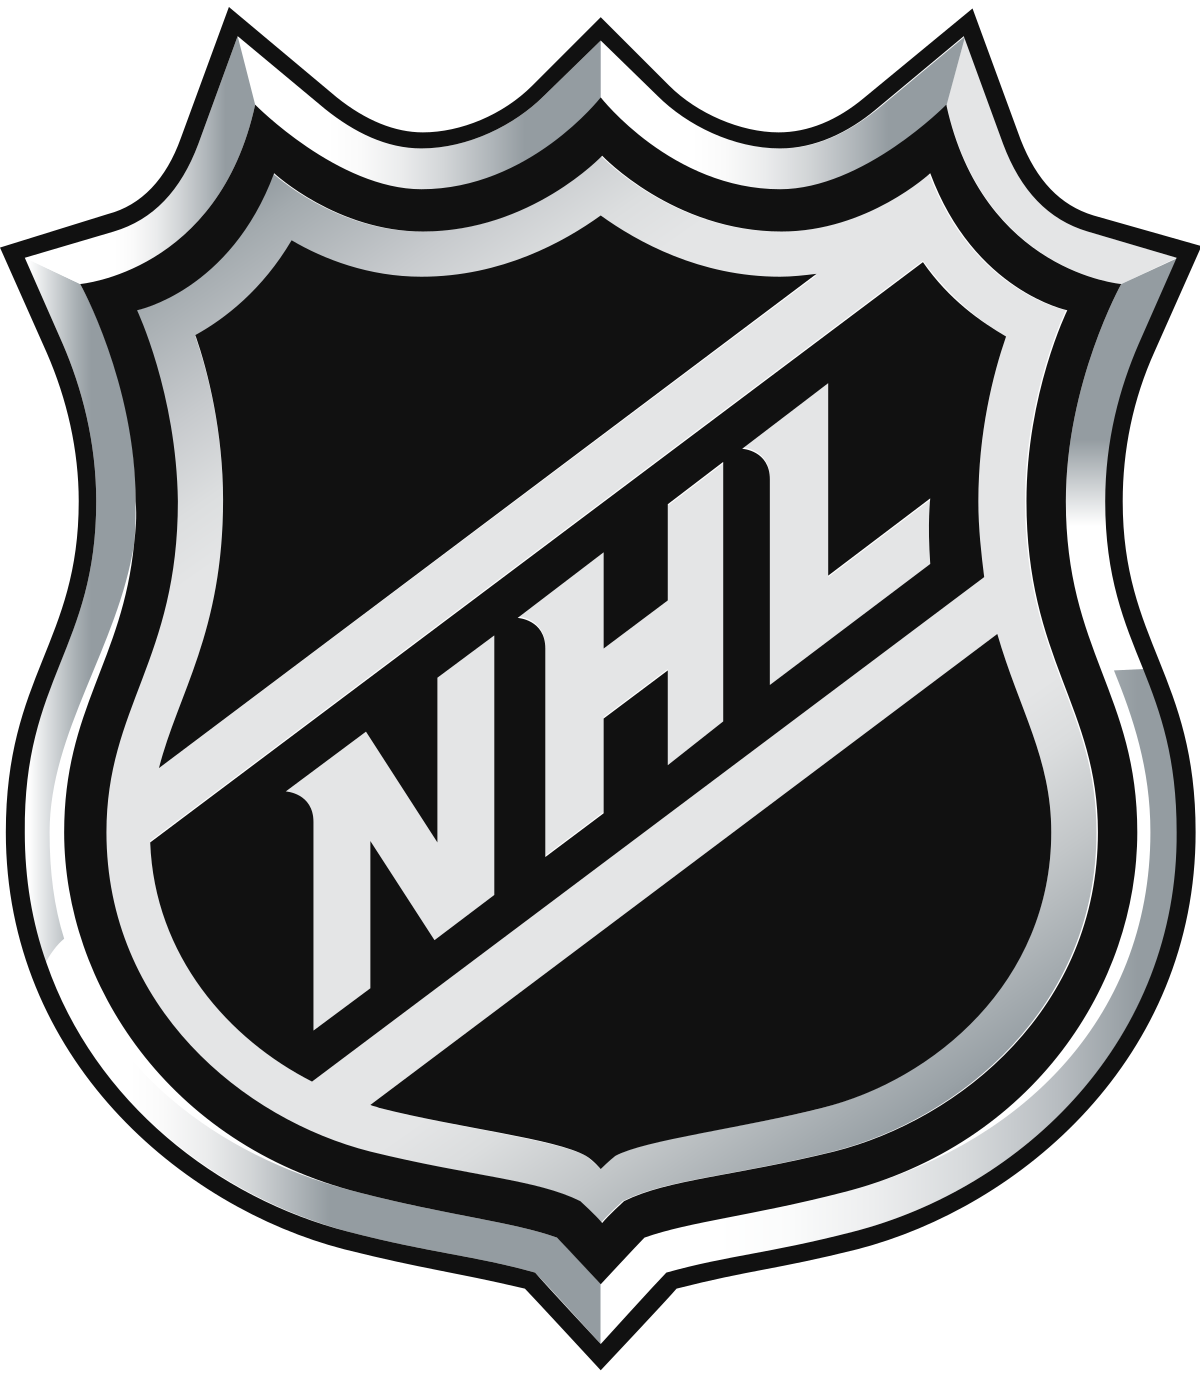 4/25 NHL Playoffs Carolina @ NY Islanders 7:40pm ET ESPN2